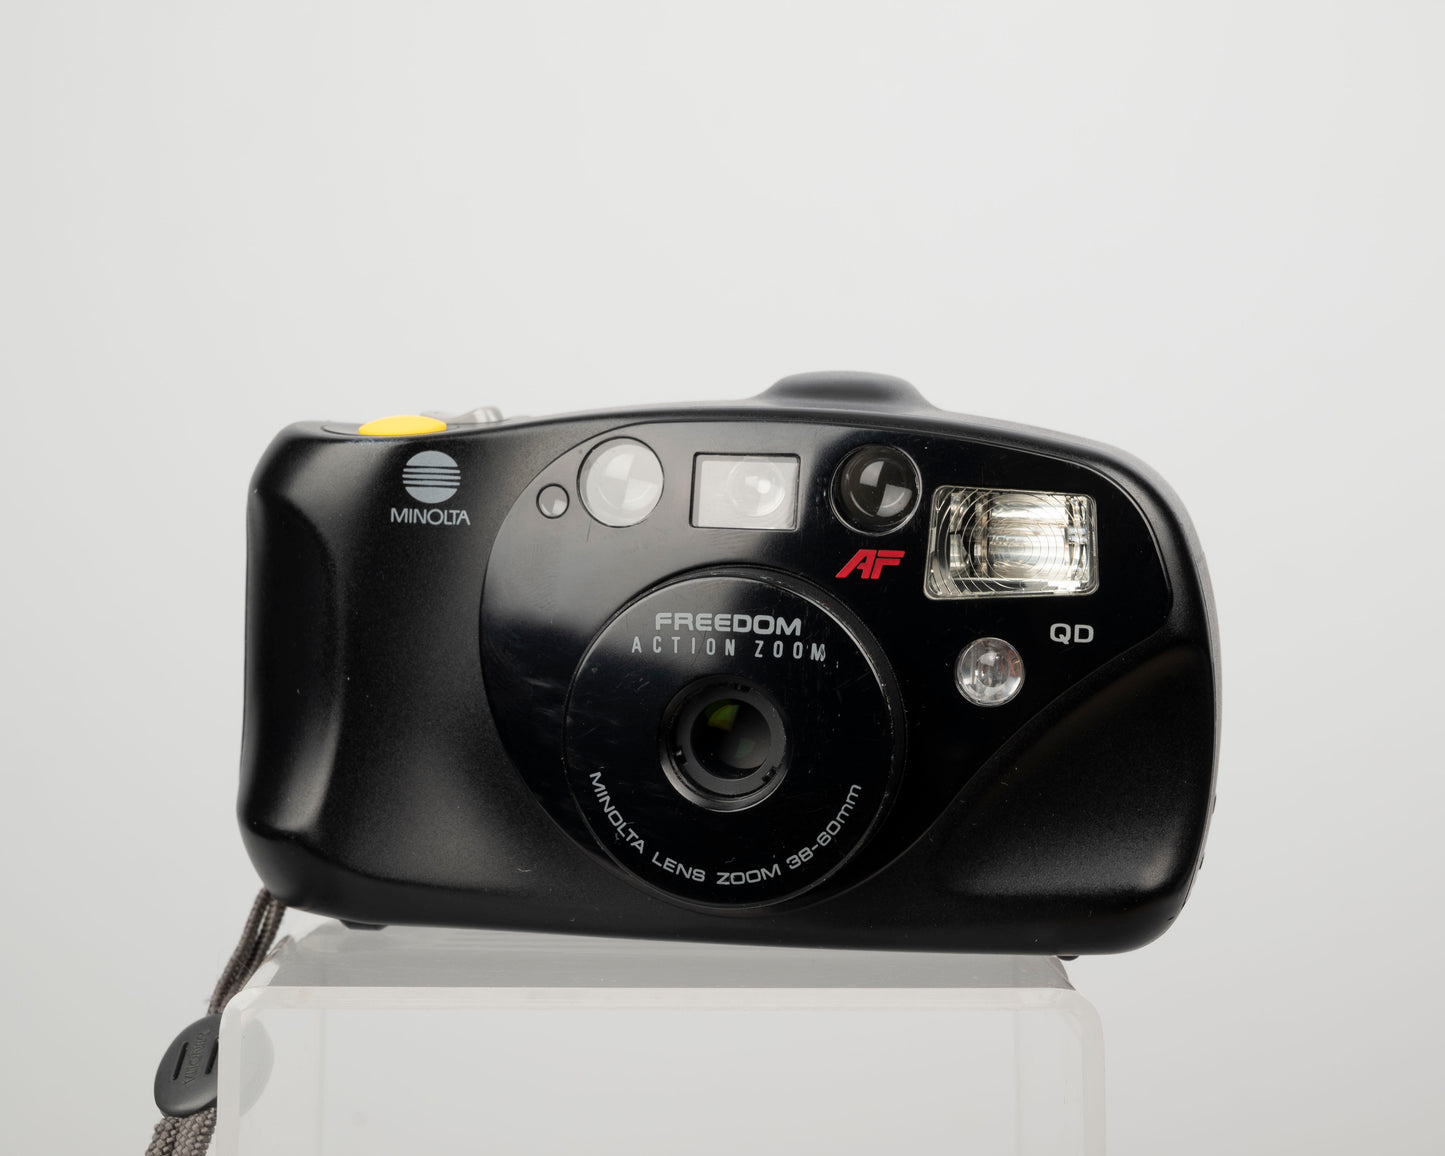 Minolta Freedom Action Zoom 35mm camera (serial 91431045)